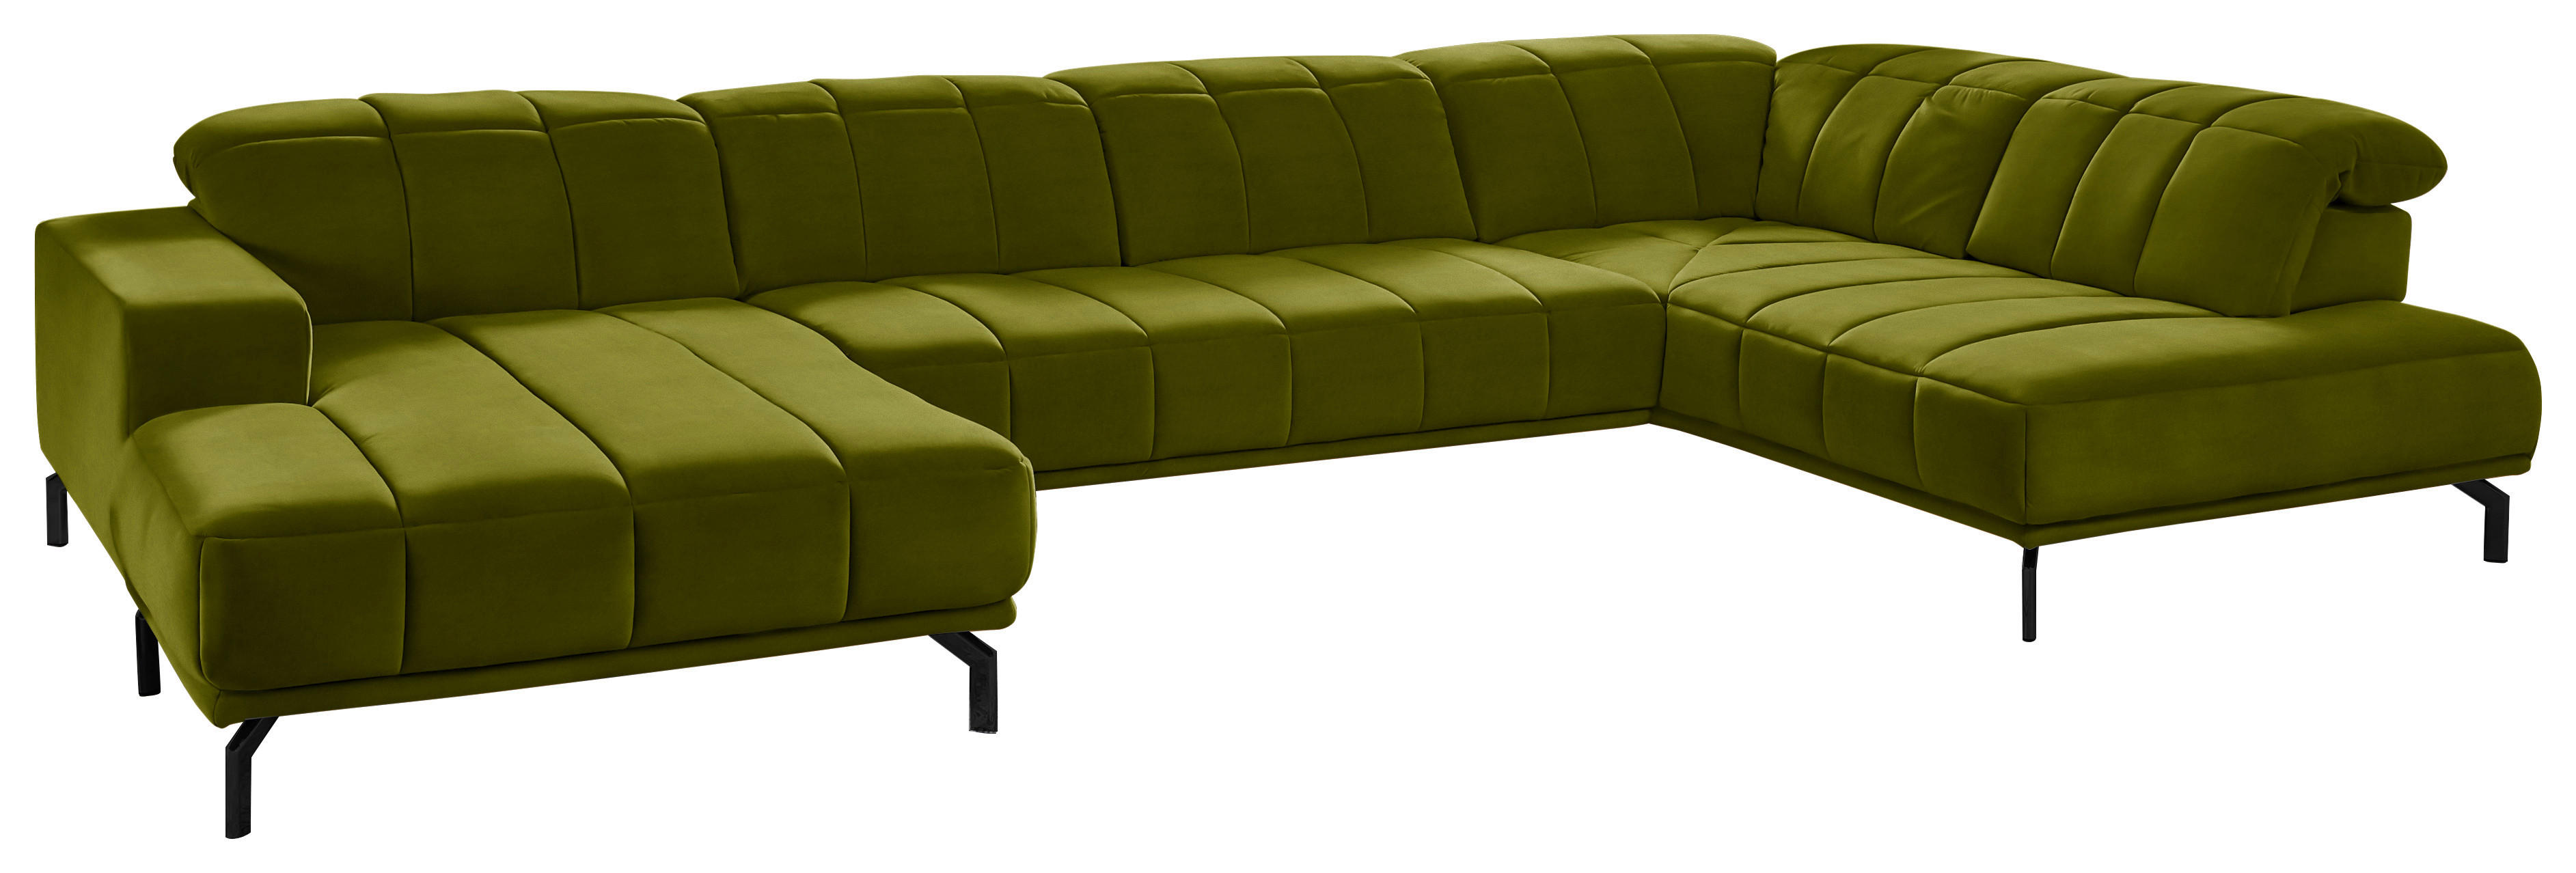 SAROKGARNITÚRA textil zöld  - fekete/zöld, Design, textil/fém (195/383/219cm) - Beldomo Style